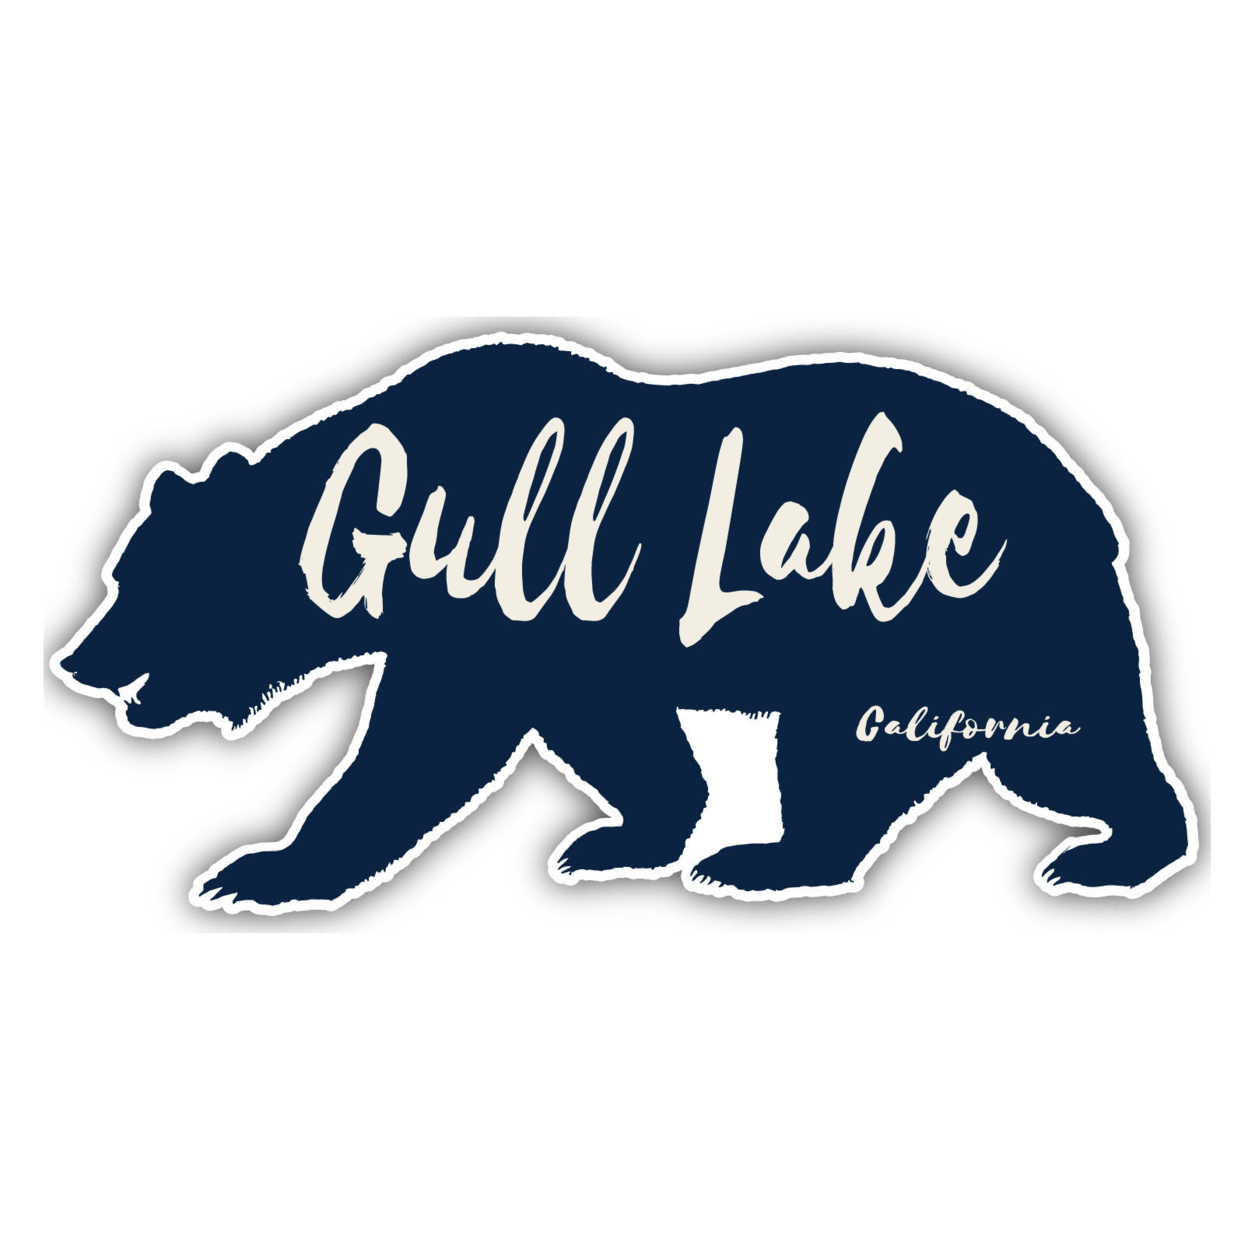 Gull Lake California Souvenir Decorative Stickers (Choose Theme And Size) - Single Unit, 4-Inch, Tent